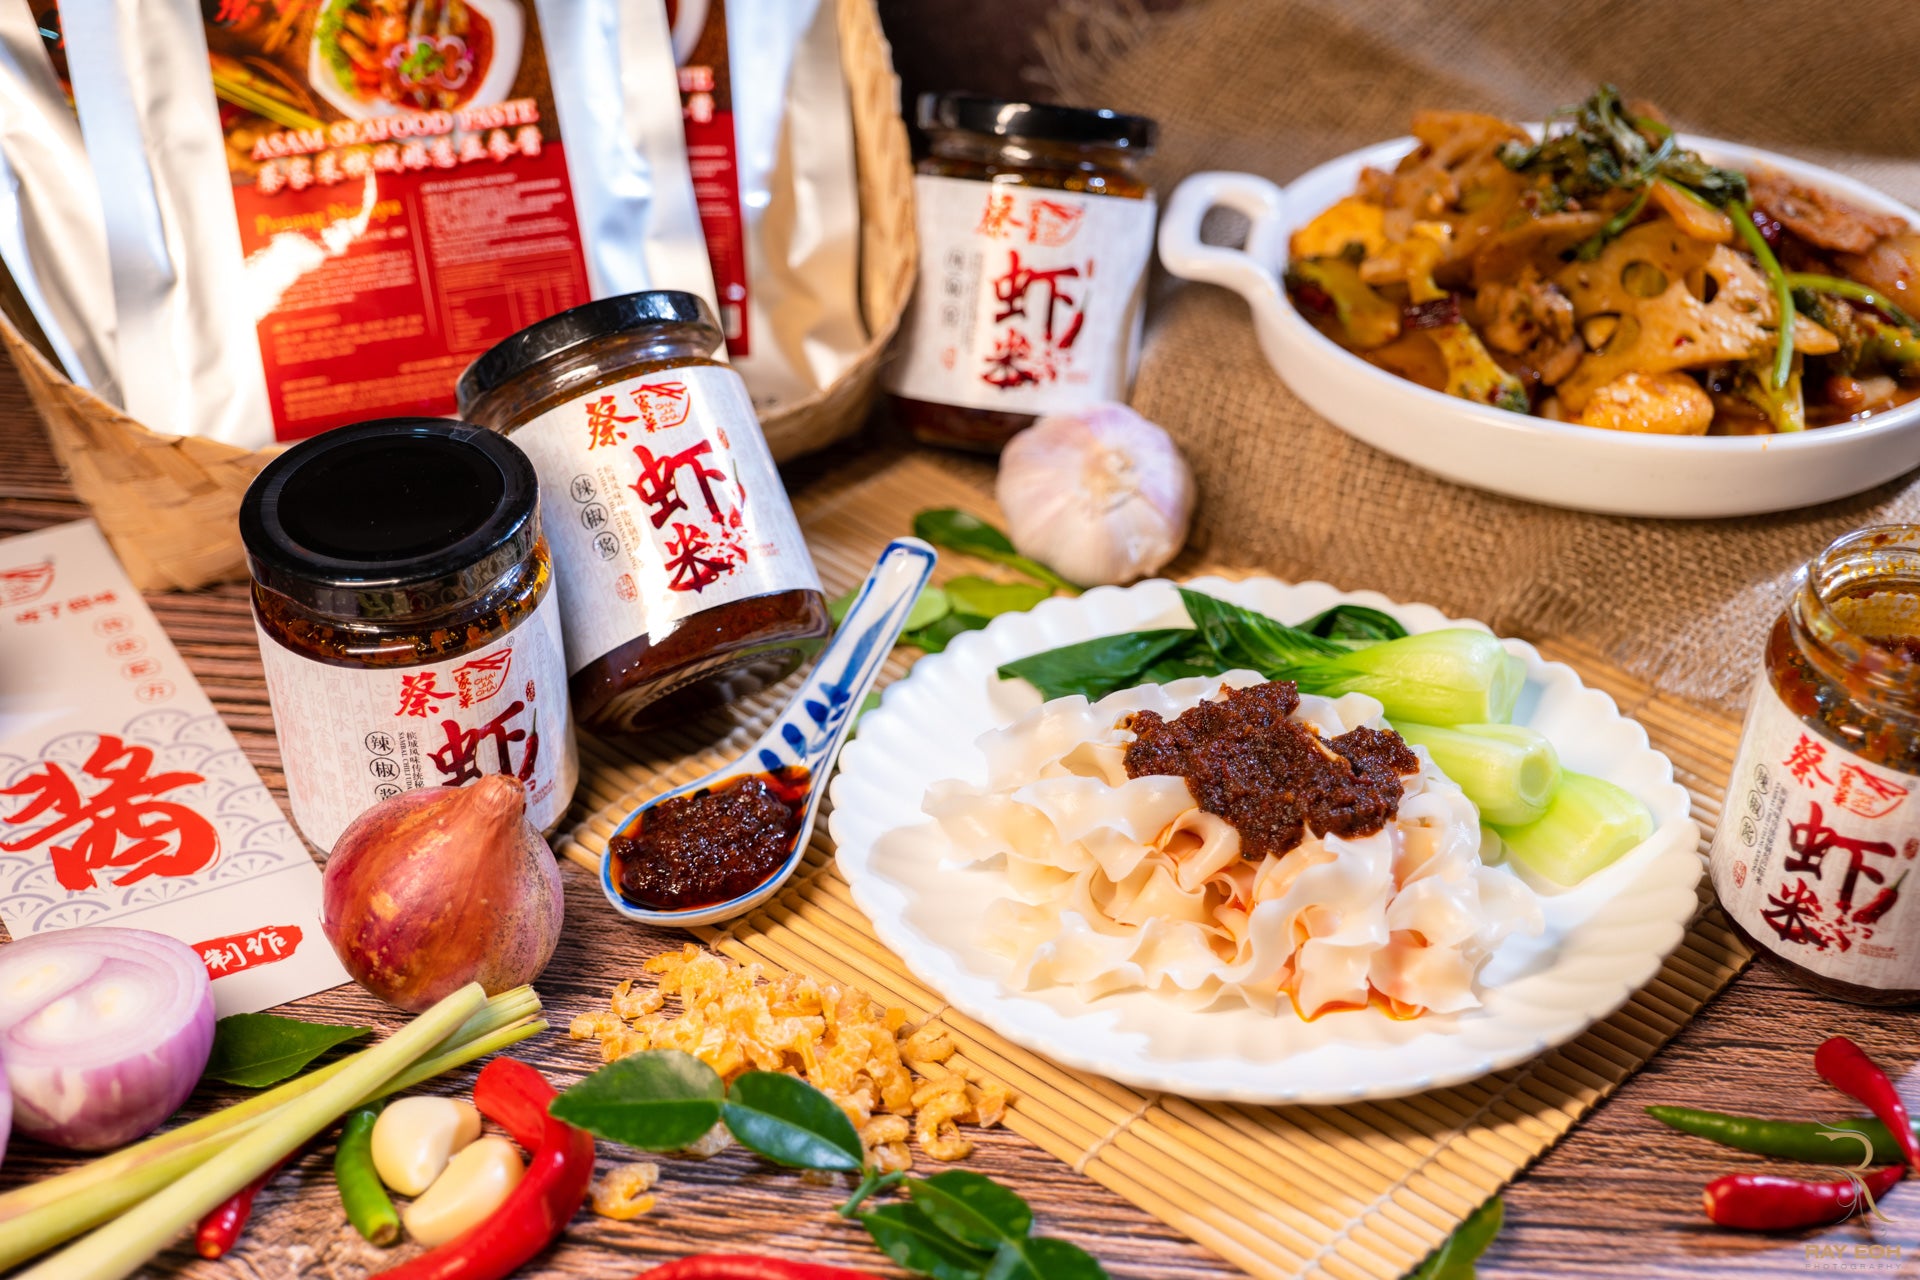 Food Product: Chai Jia Chai 蔡家菜